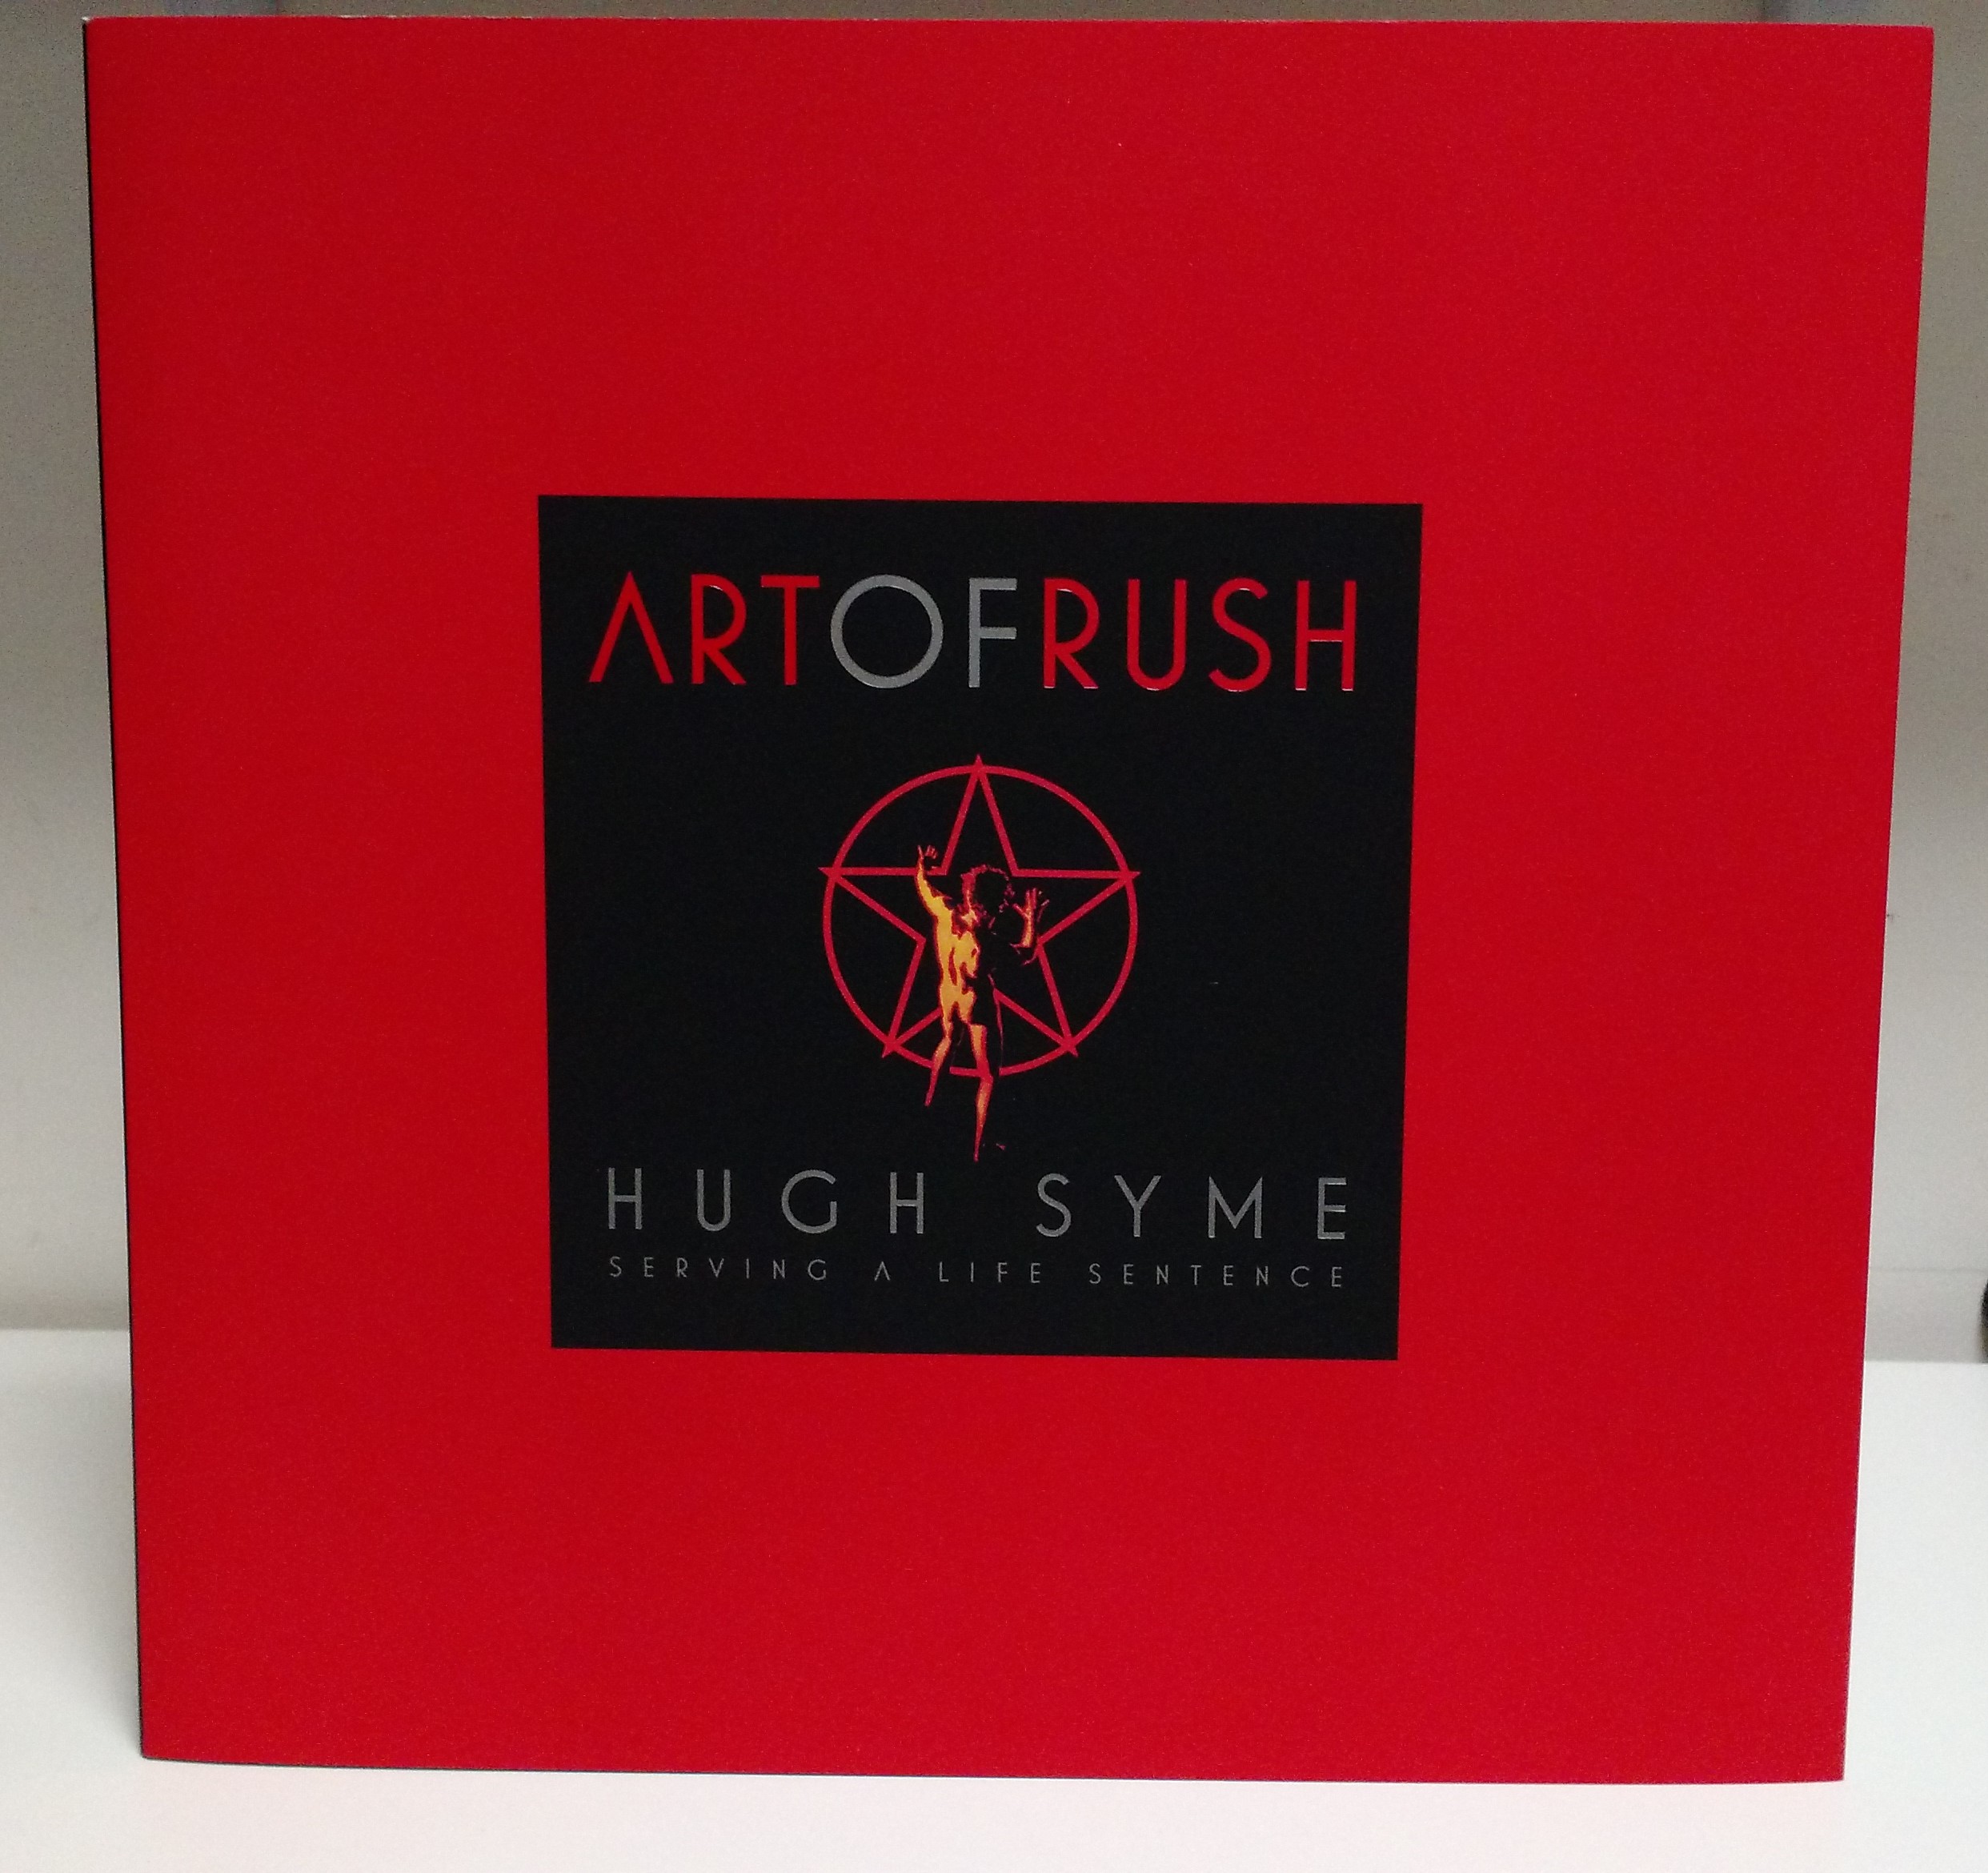 The Art of Rush: Hugh Syme Serving a Life Sentence